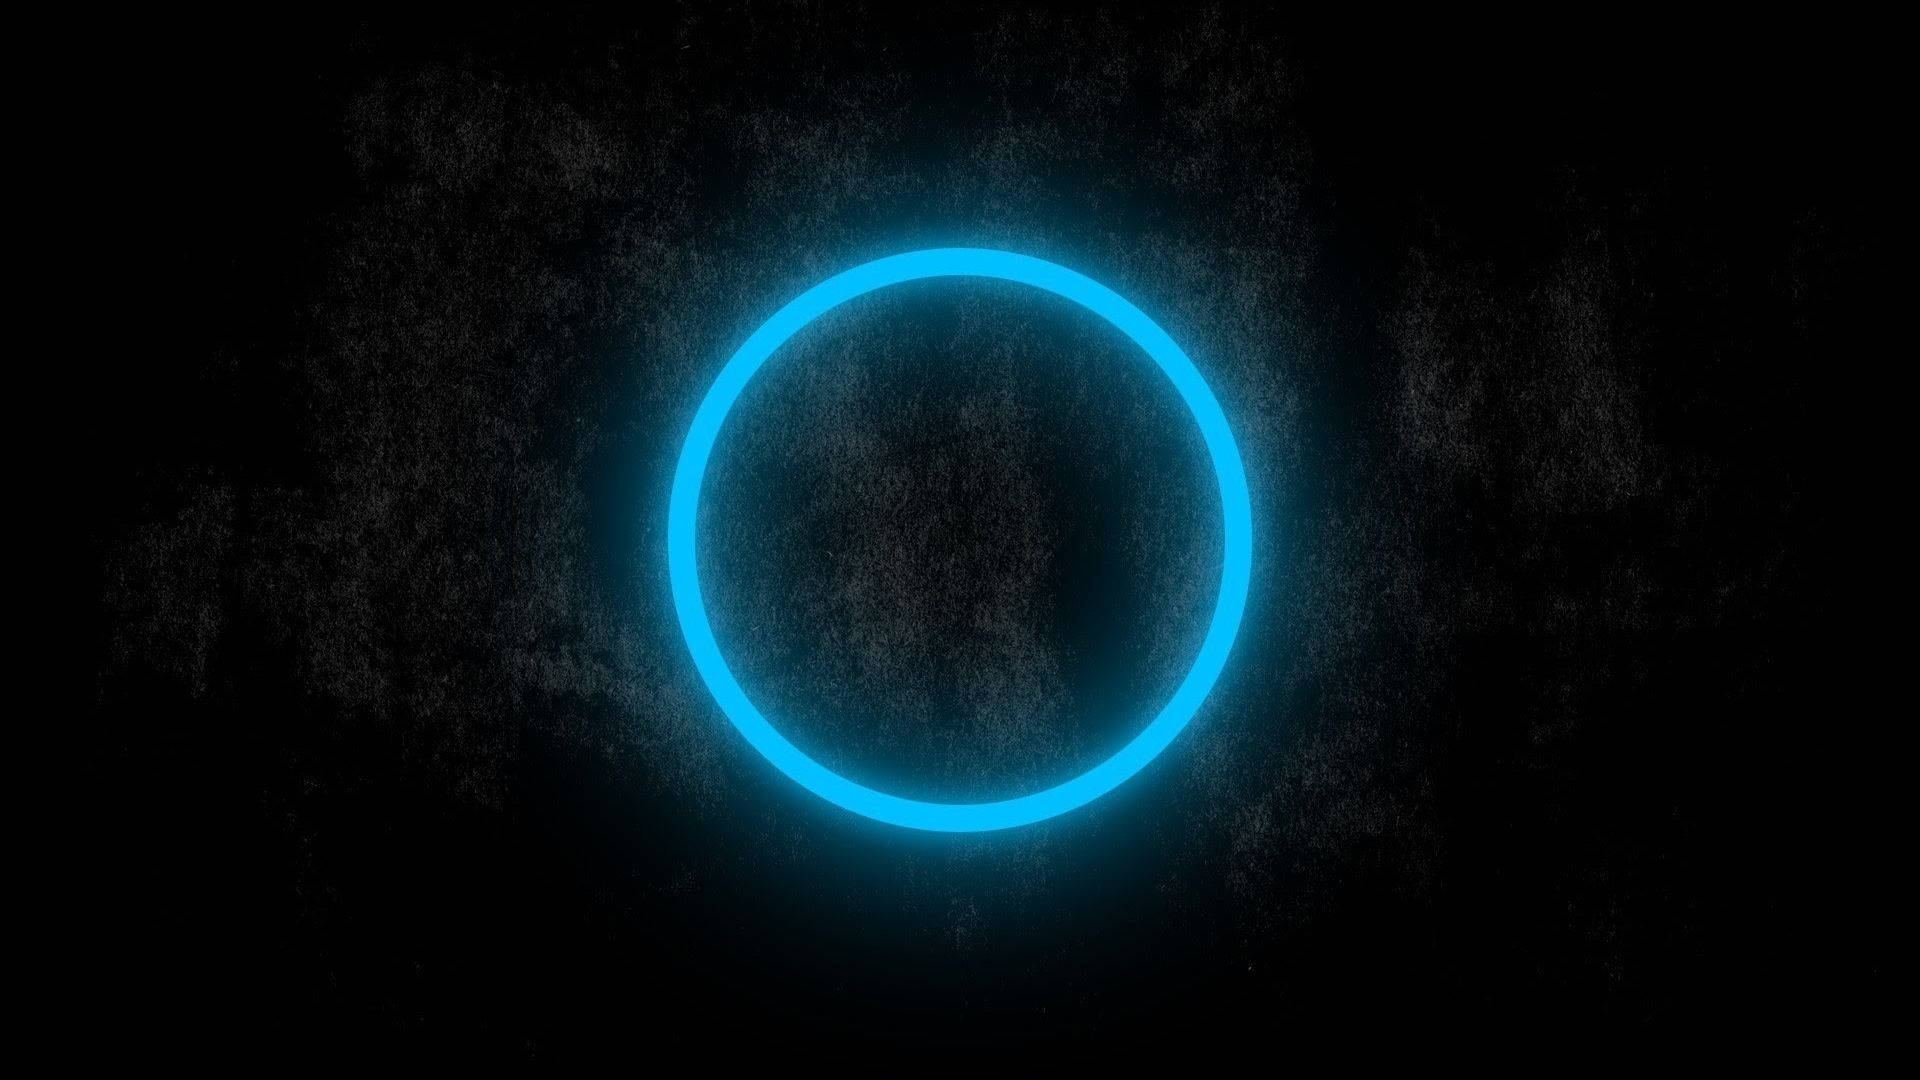 Neon Blue Circle